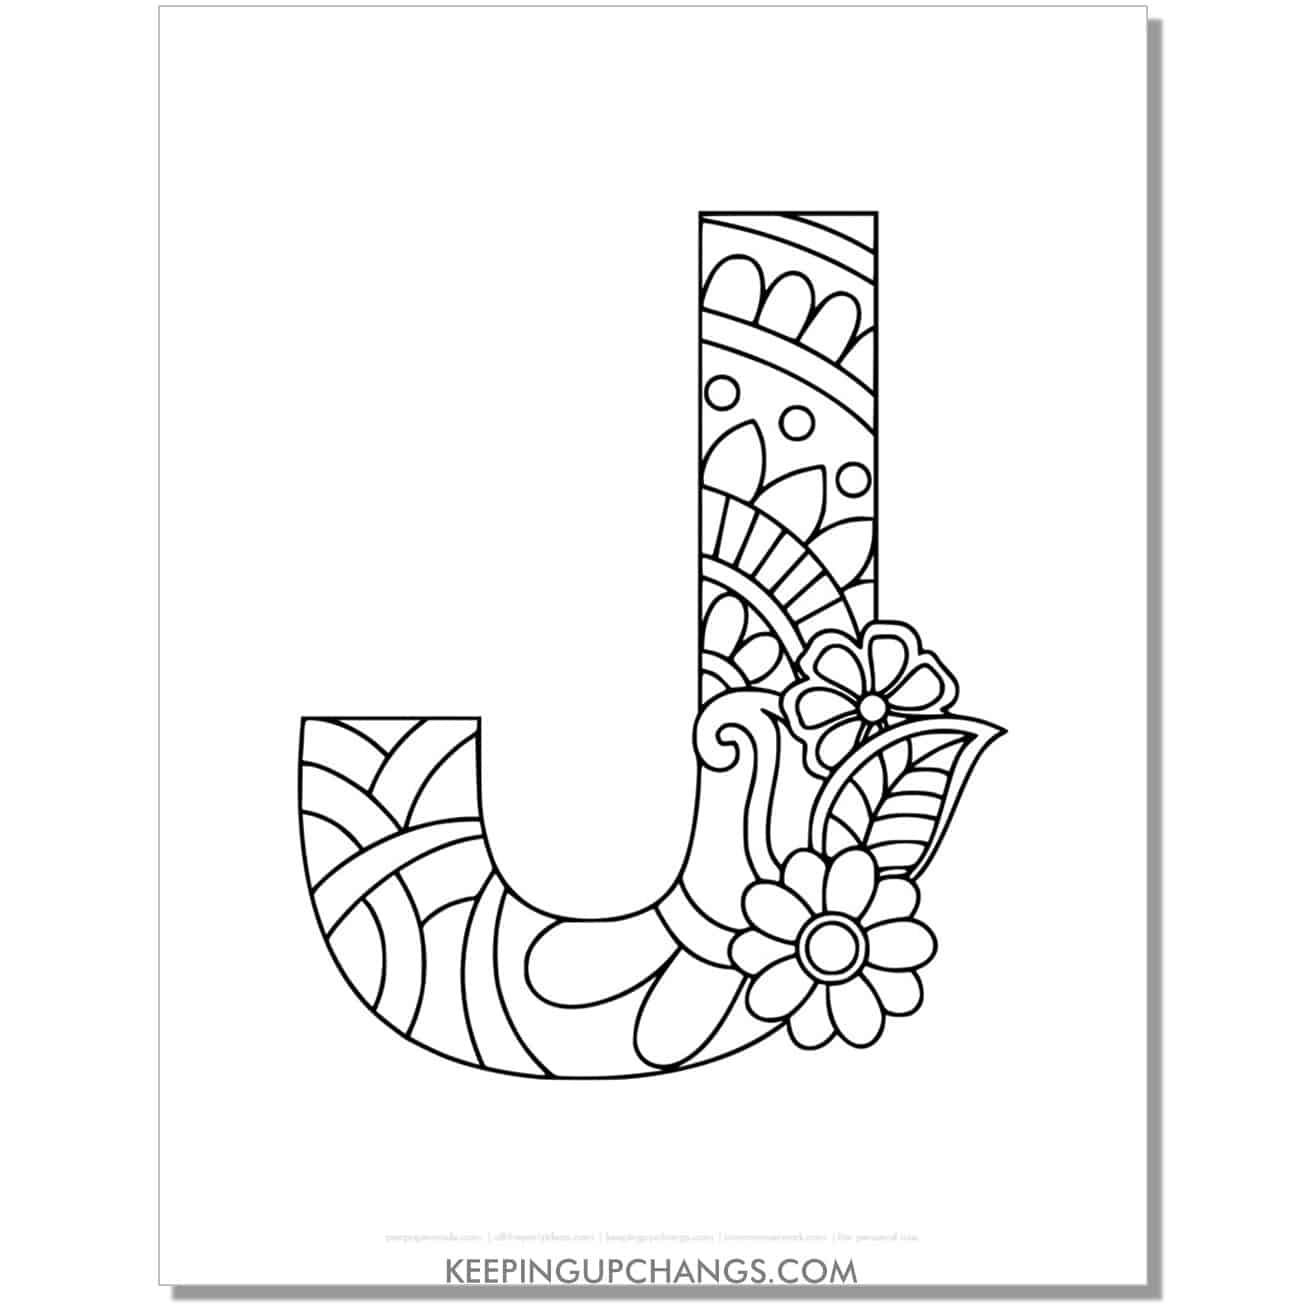 free alphabet j to color, intricate flower mandala zentangle.